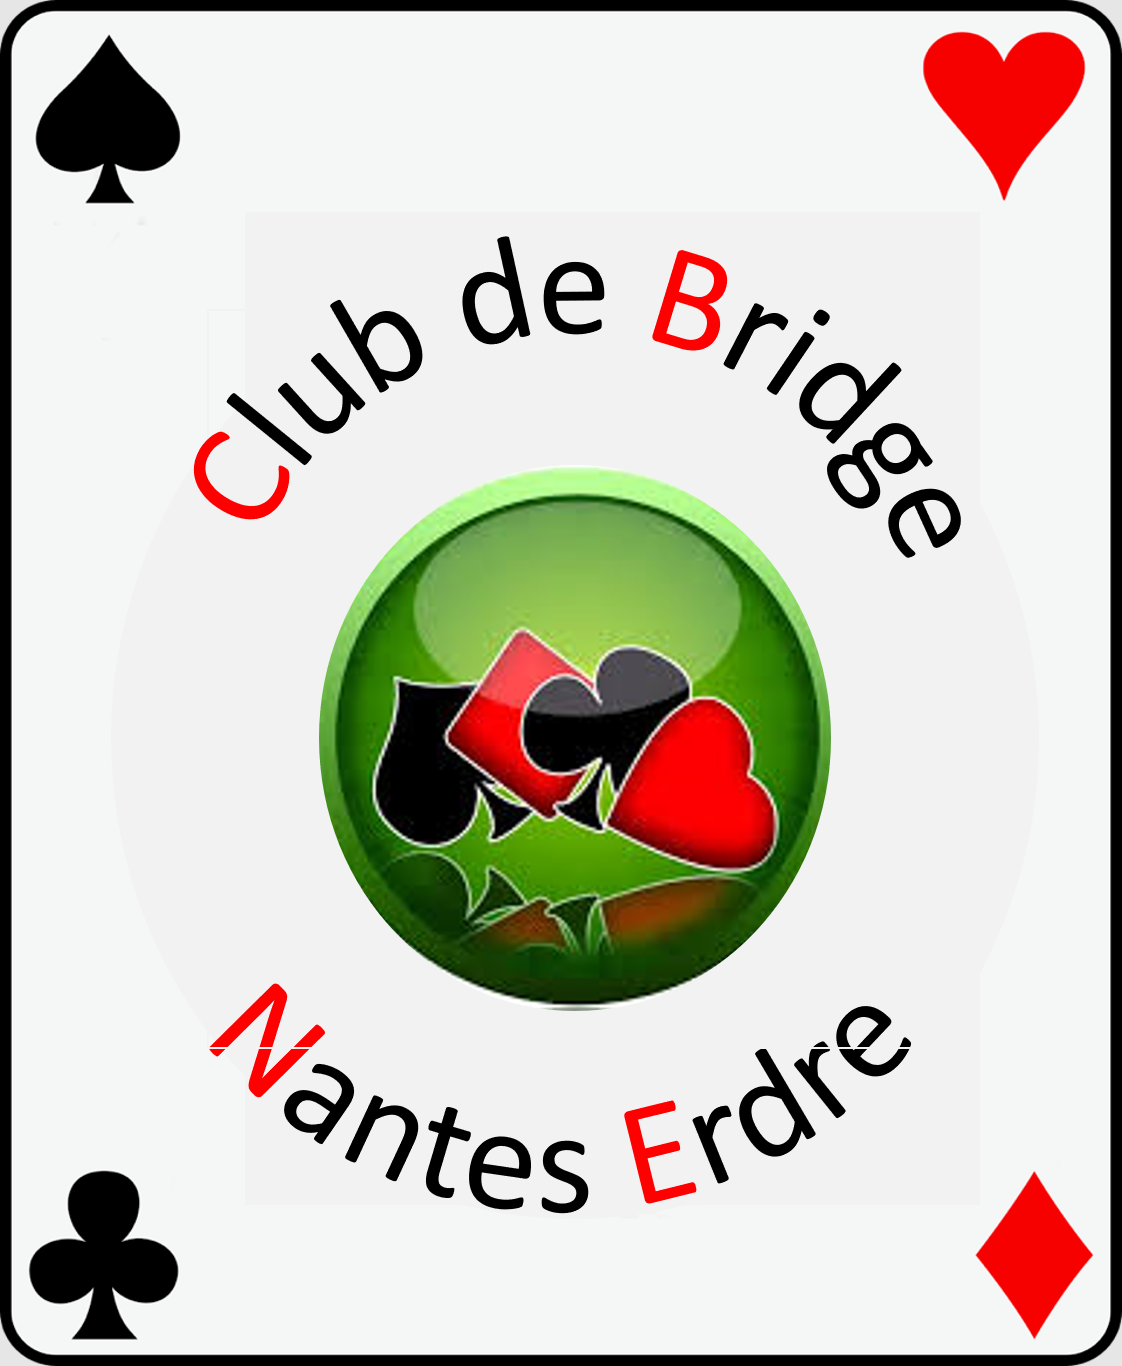 Club de Bridge Nantes Erdre (CBNE)